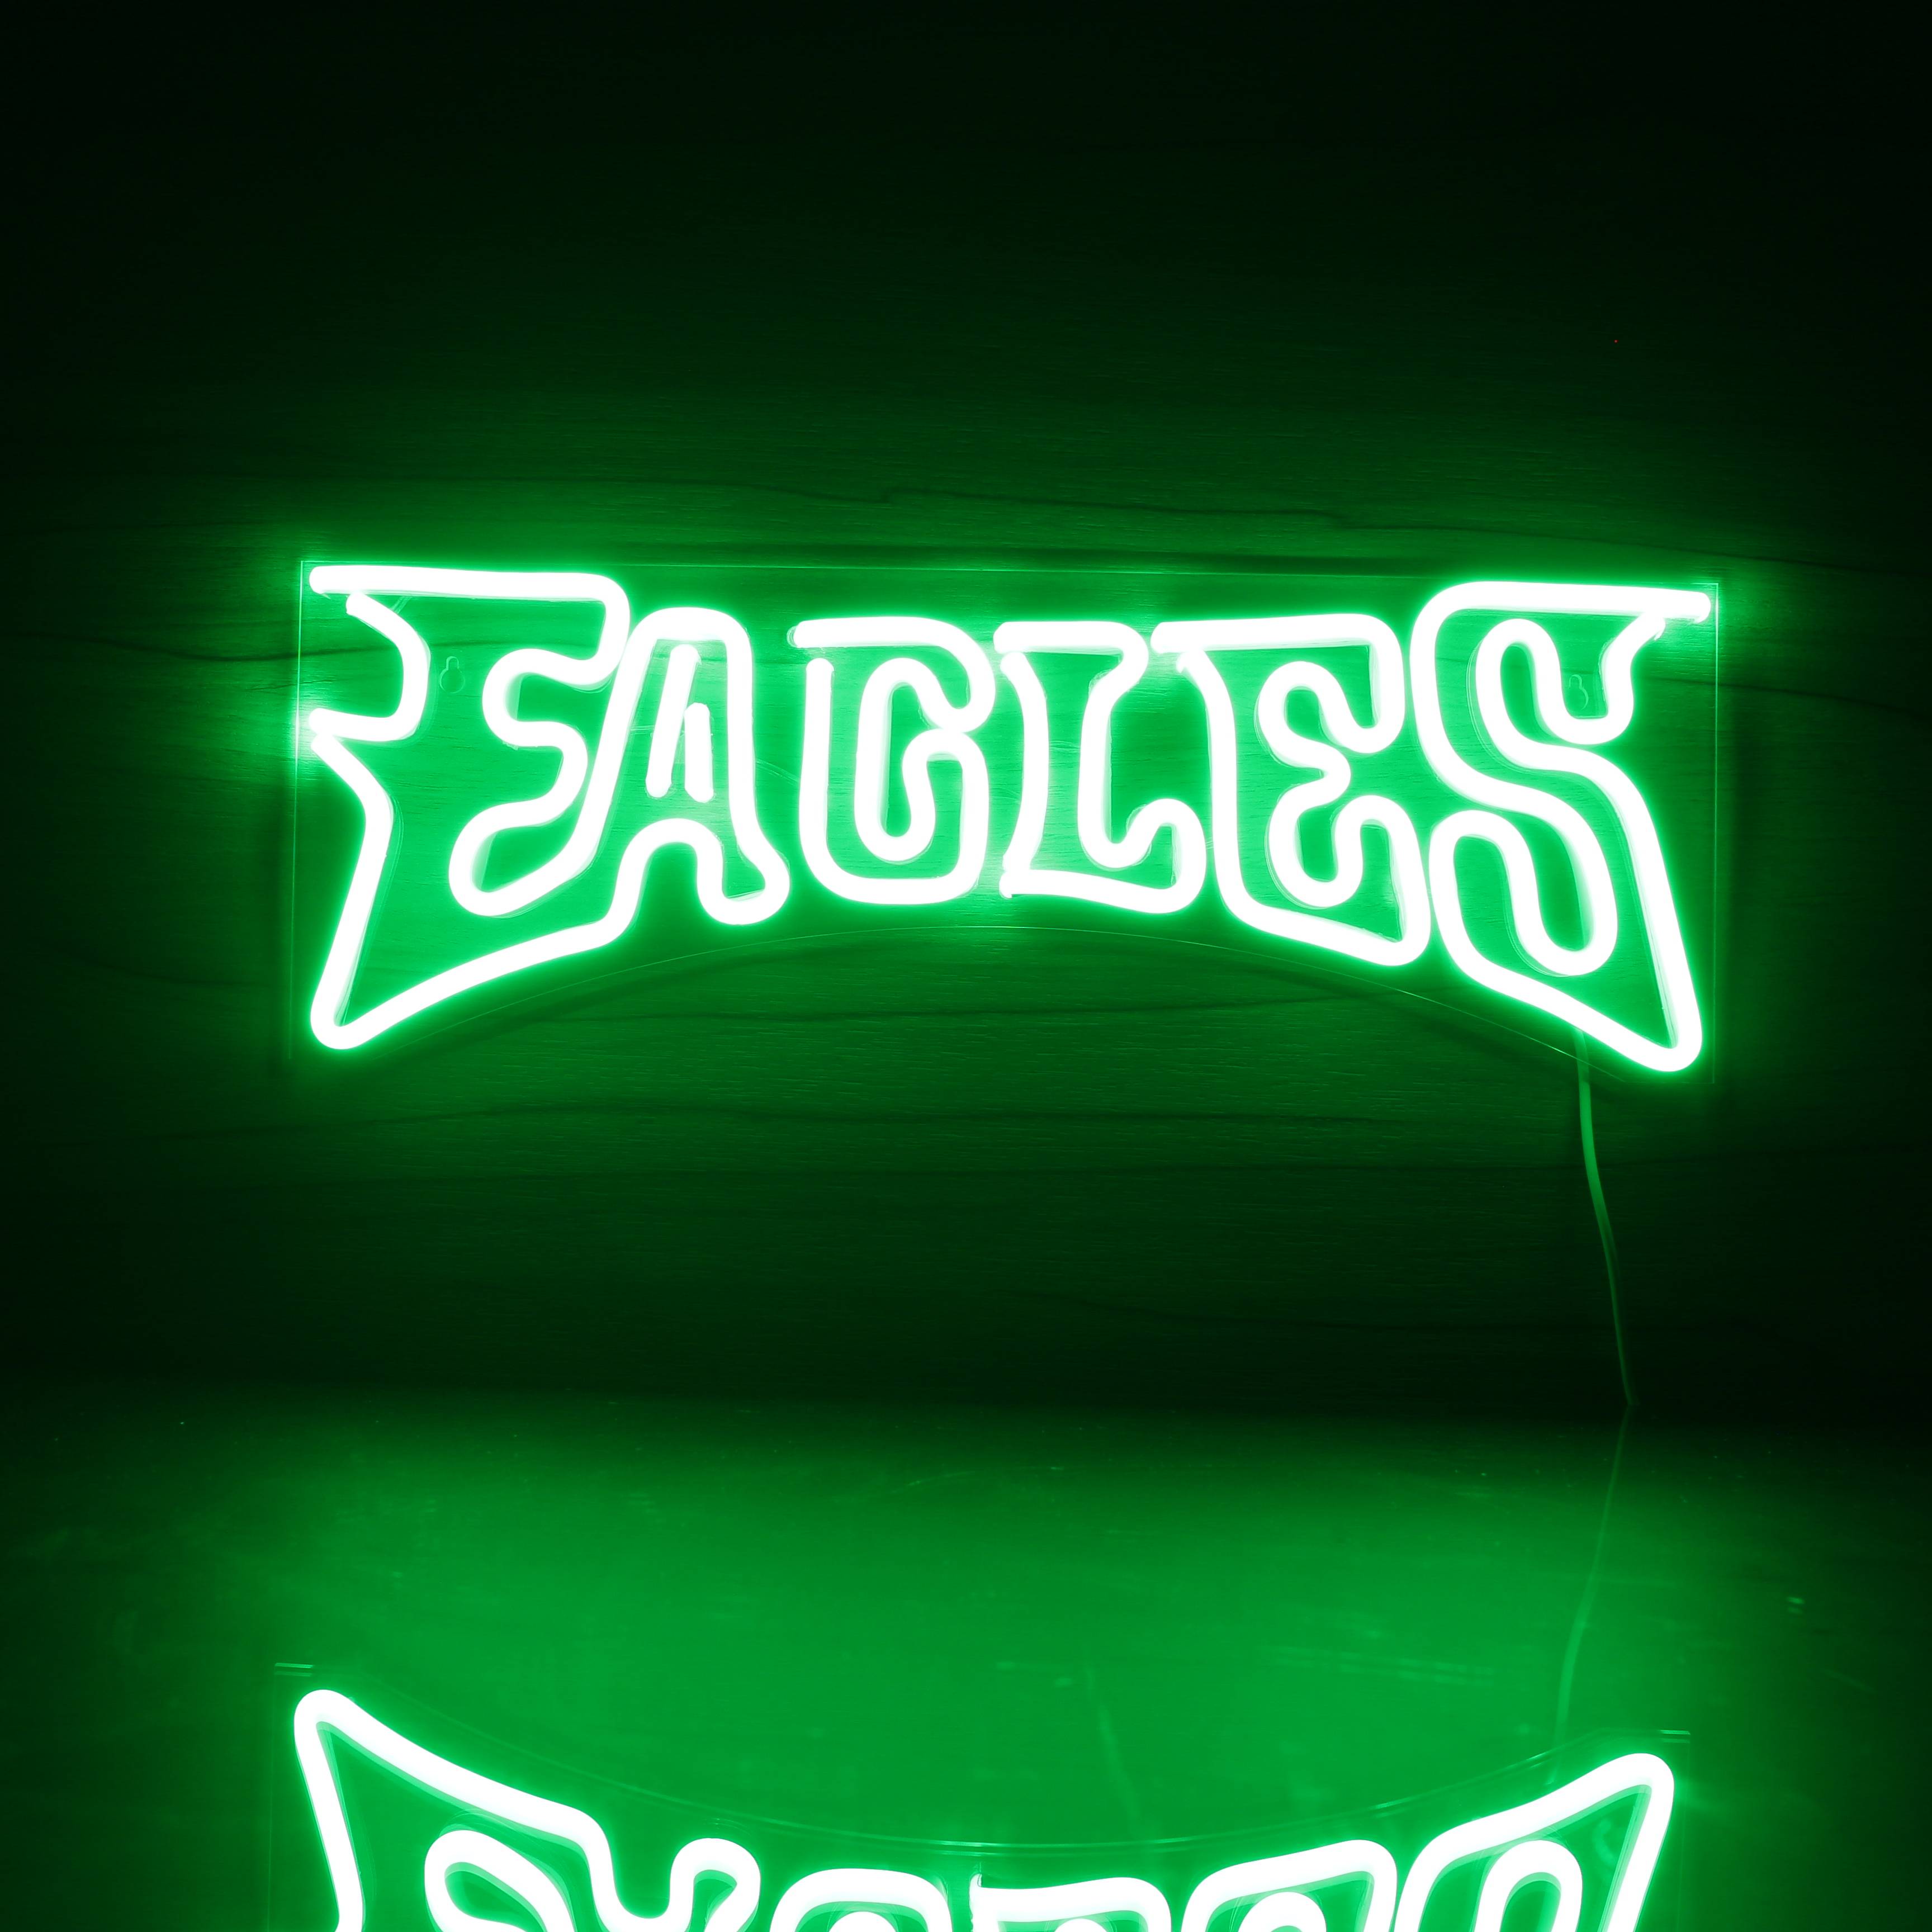 Philadelphia Eagles Neon LED Sign Home Decor Bar